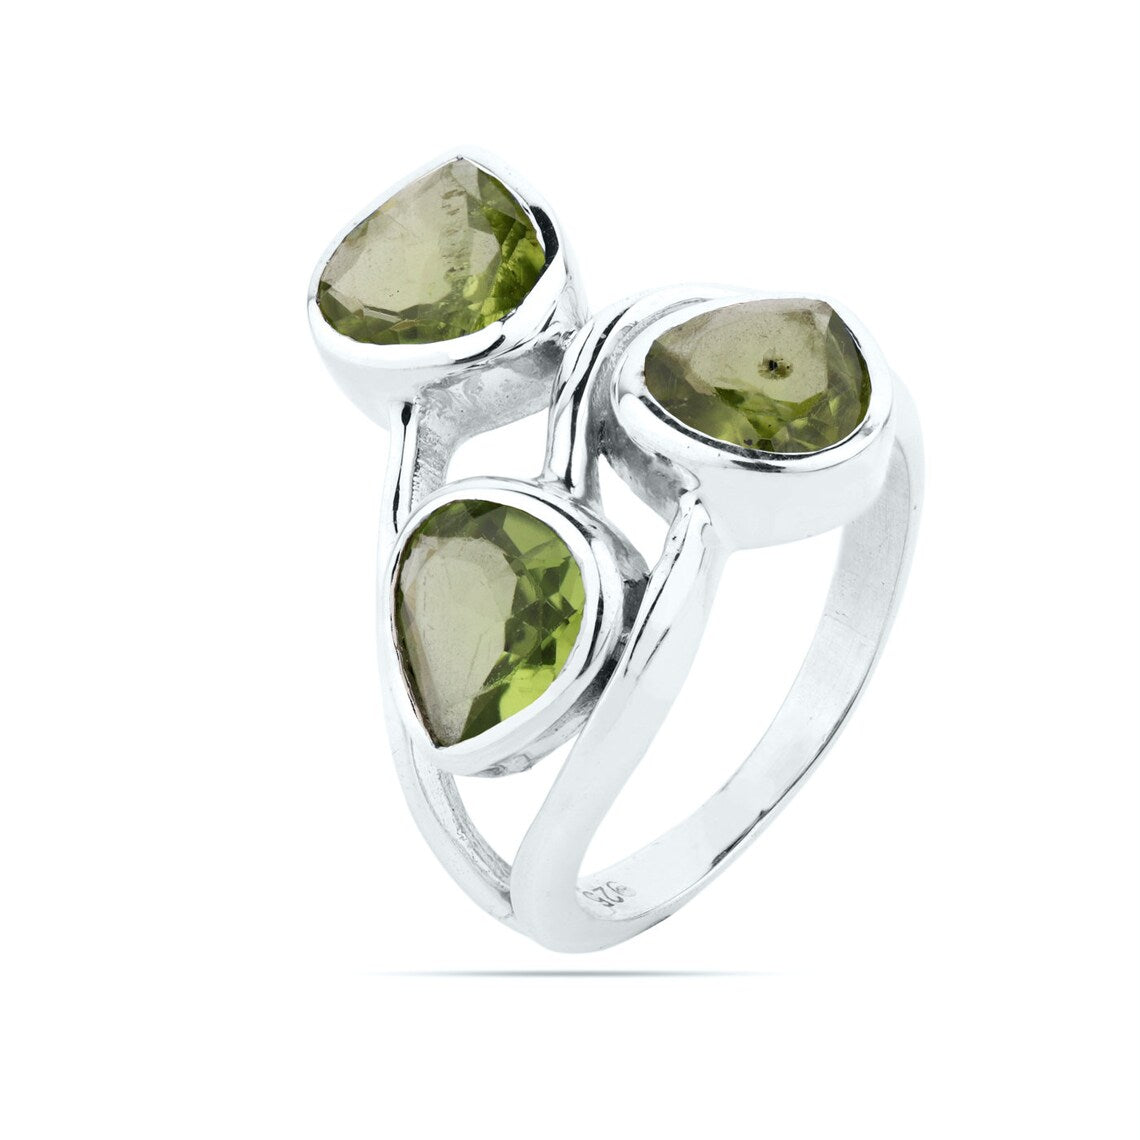 Natural Peridot Gemstone Ring, 925 Silver Ring, Green Color Ring, Handmade Ring Jewelry, Peridot Jewelry, Faceted Cut Peridot Ring